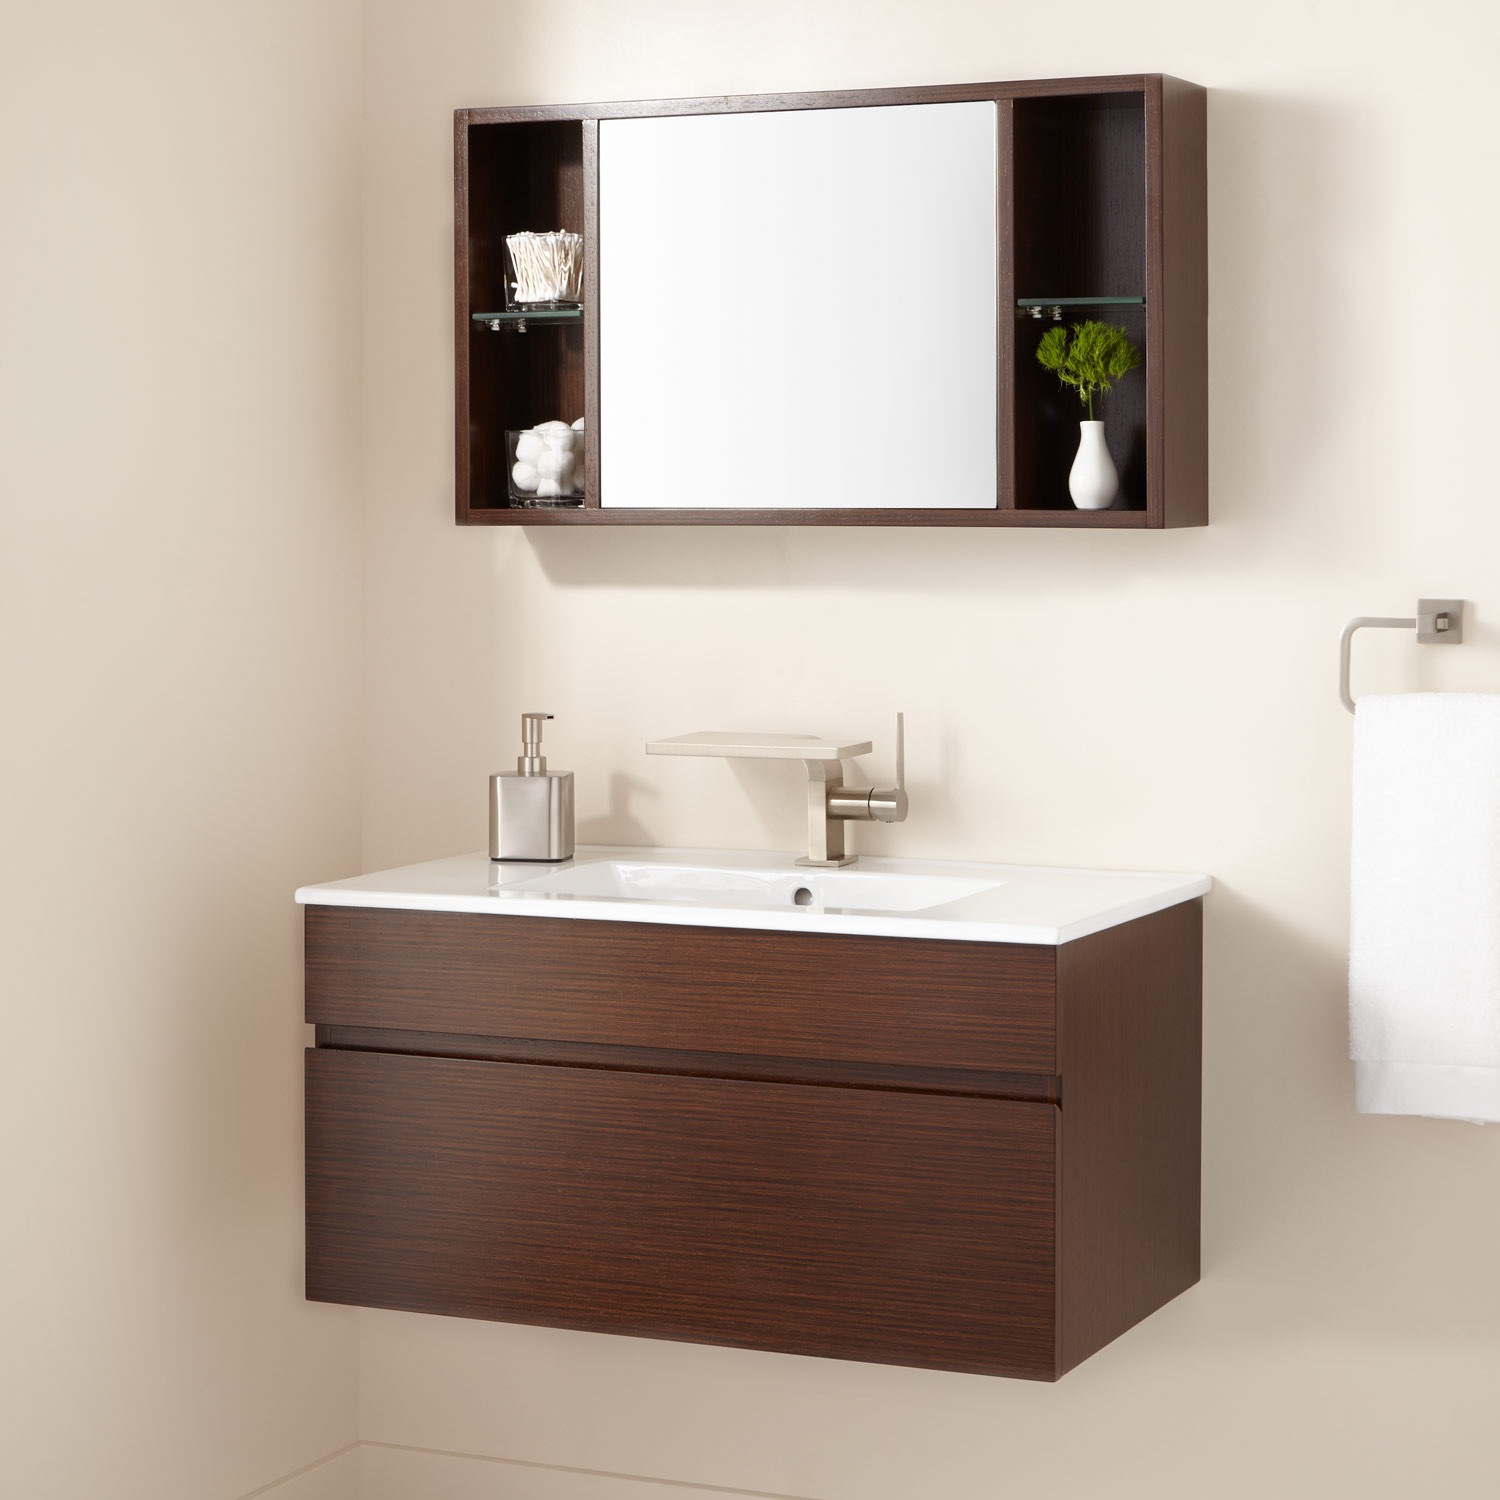 Mounted Bathroom Cabinet
 33" Dimitri Wall Mount Vanity and Mirrored Storage Bathroom